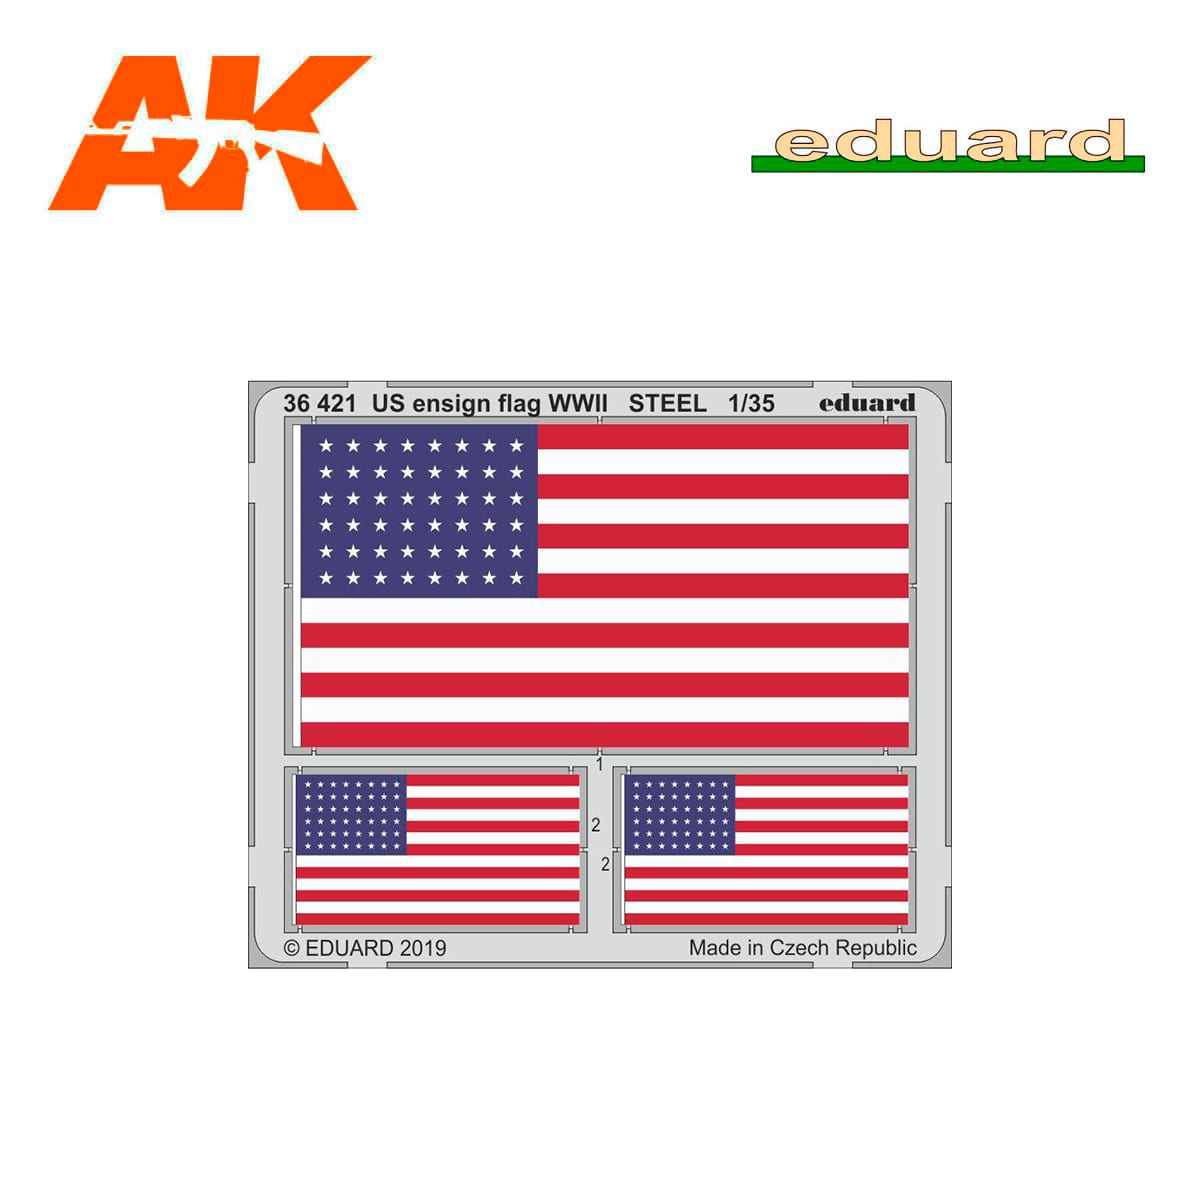 US ensign flag WWII STEEL 1/35